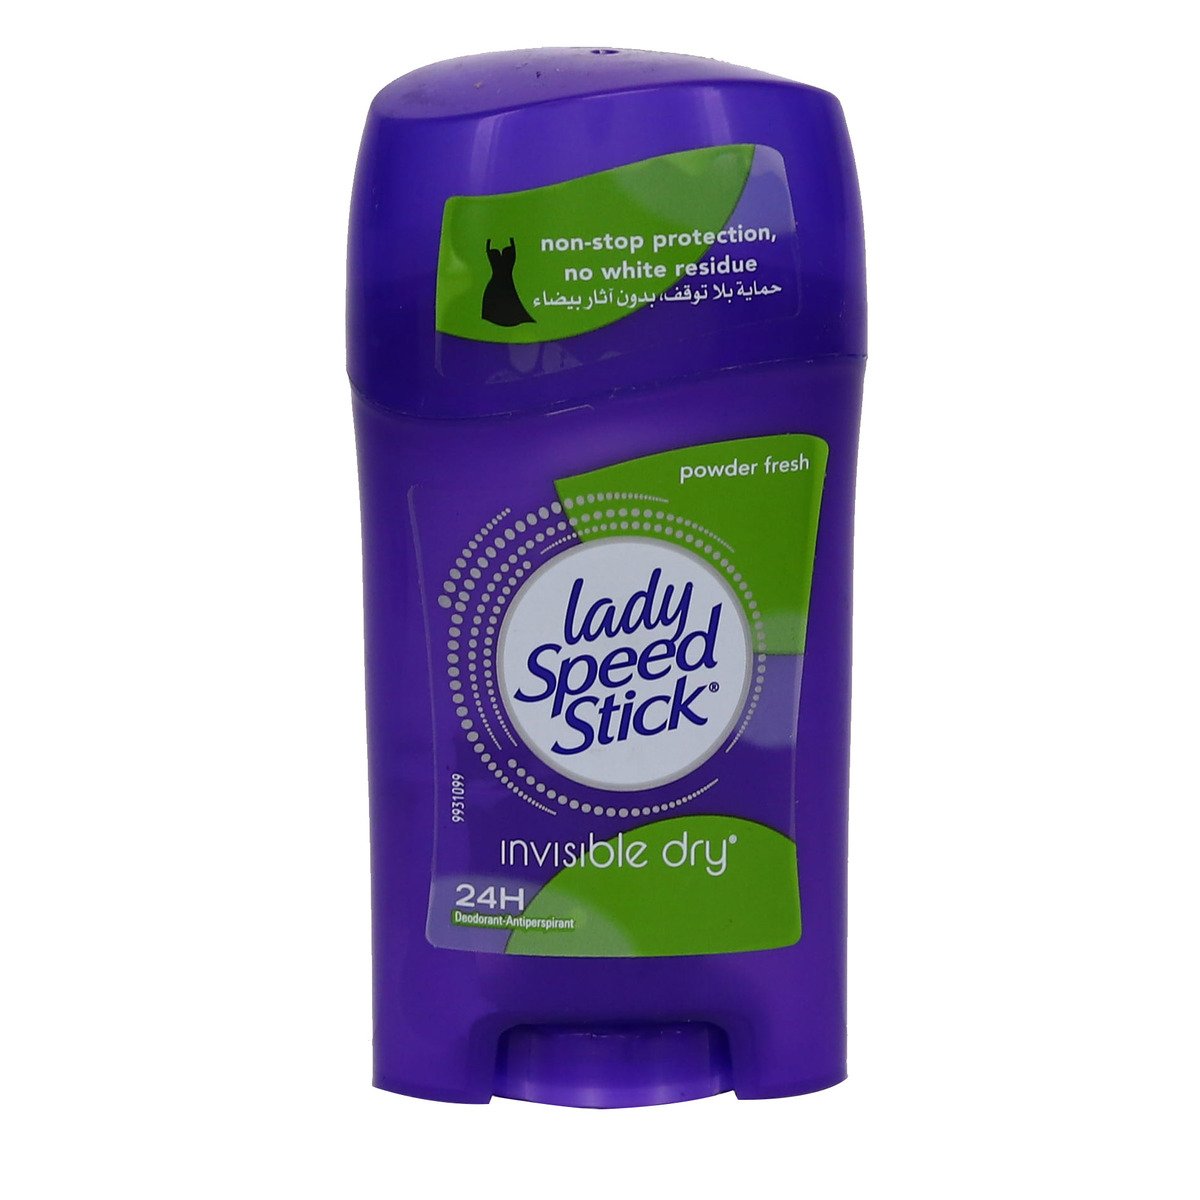 Mennen Lady Speed Stick Deodorant Anti-Perspirant Powder Fresh Invisible Dry 1.4oz